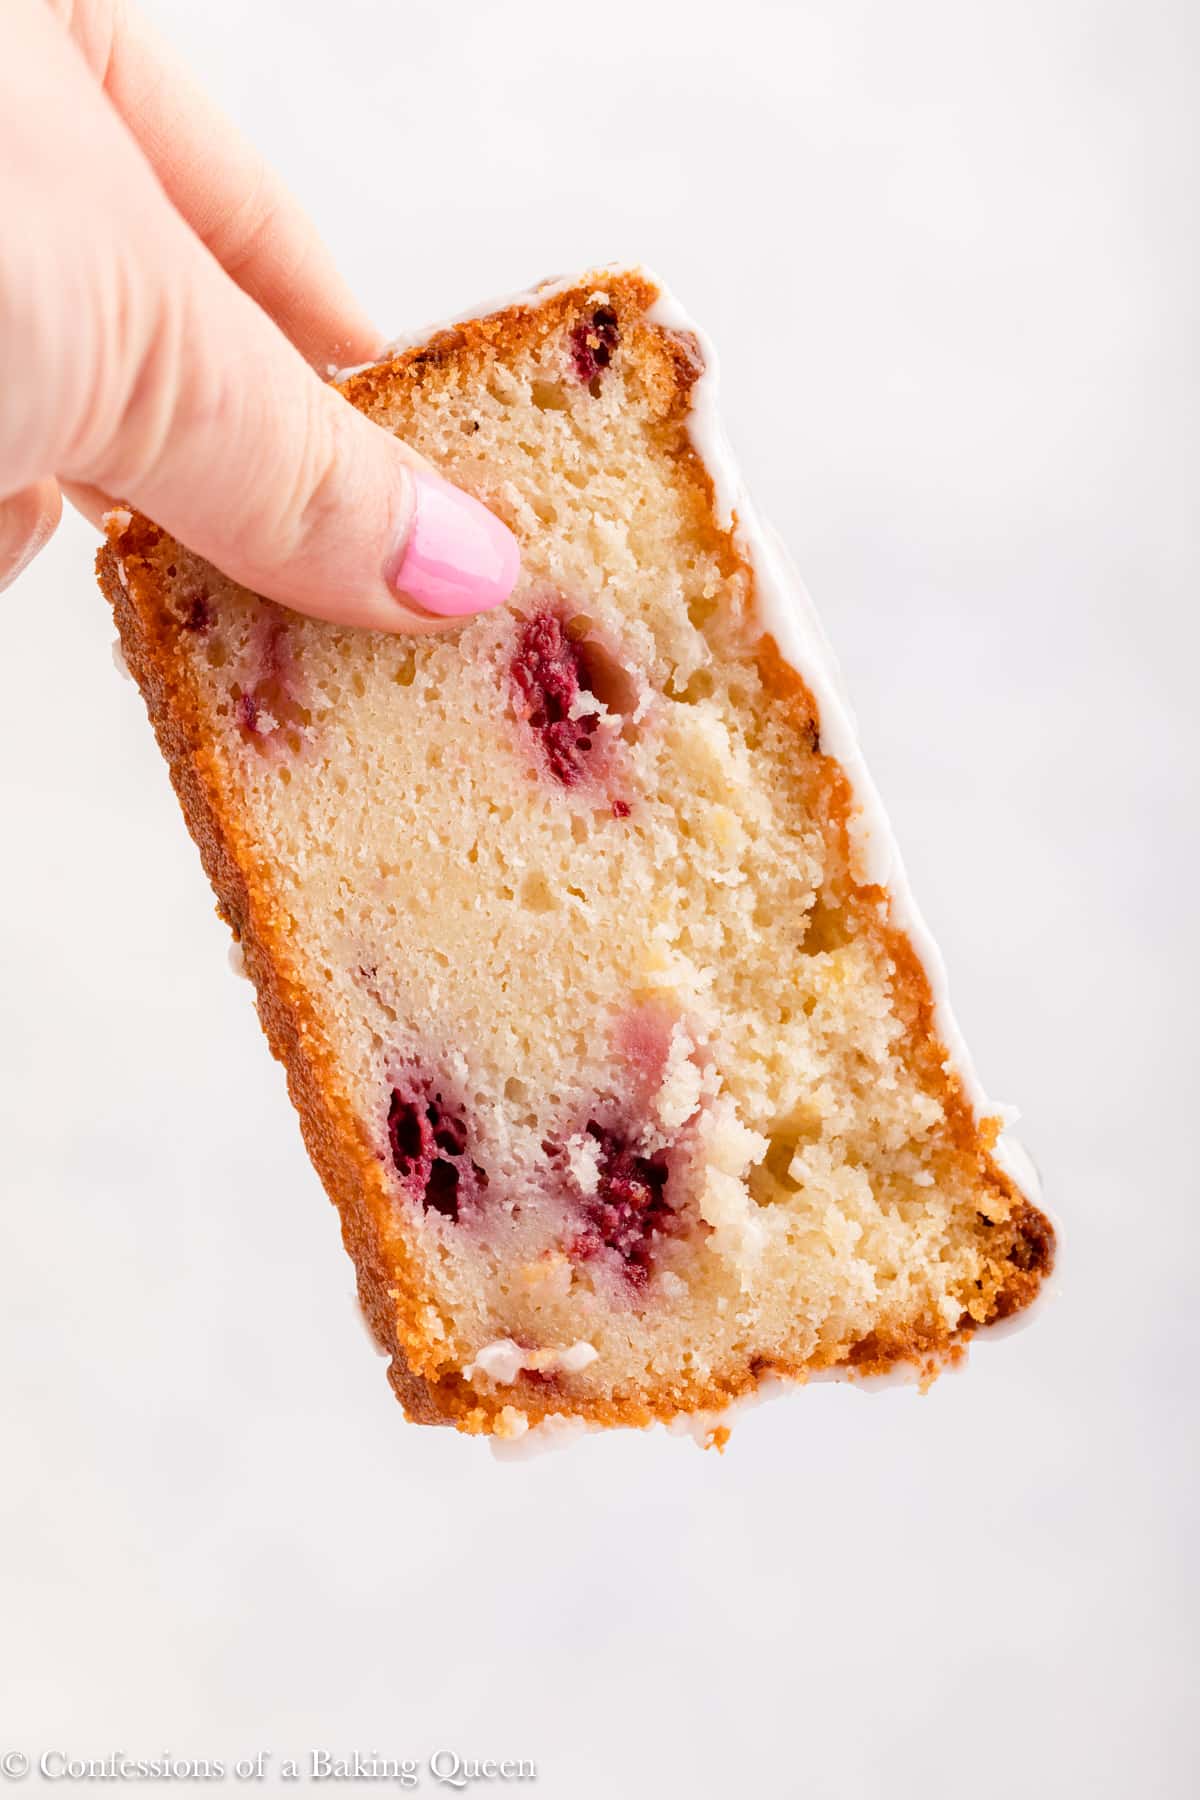 A hand holding a slice of raspberry lemon loaf cake.